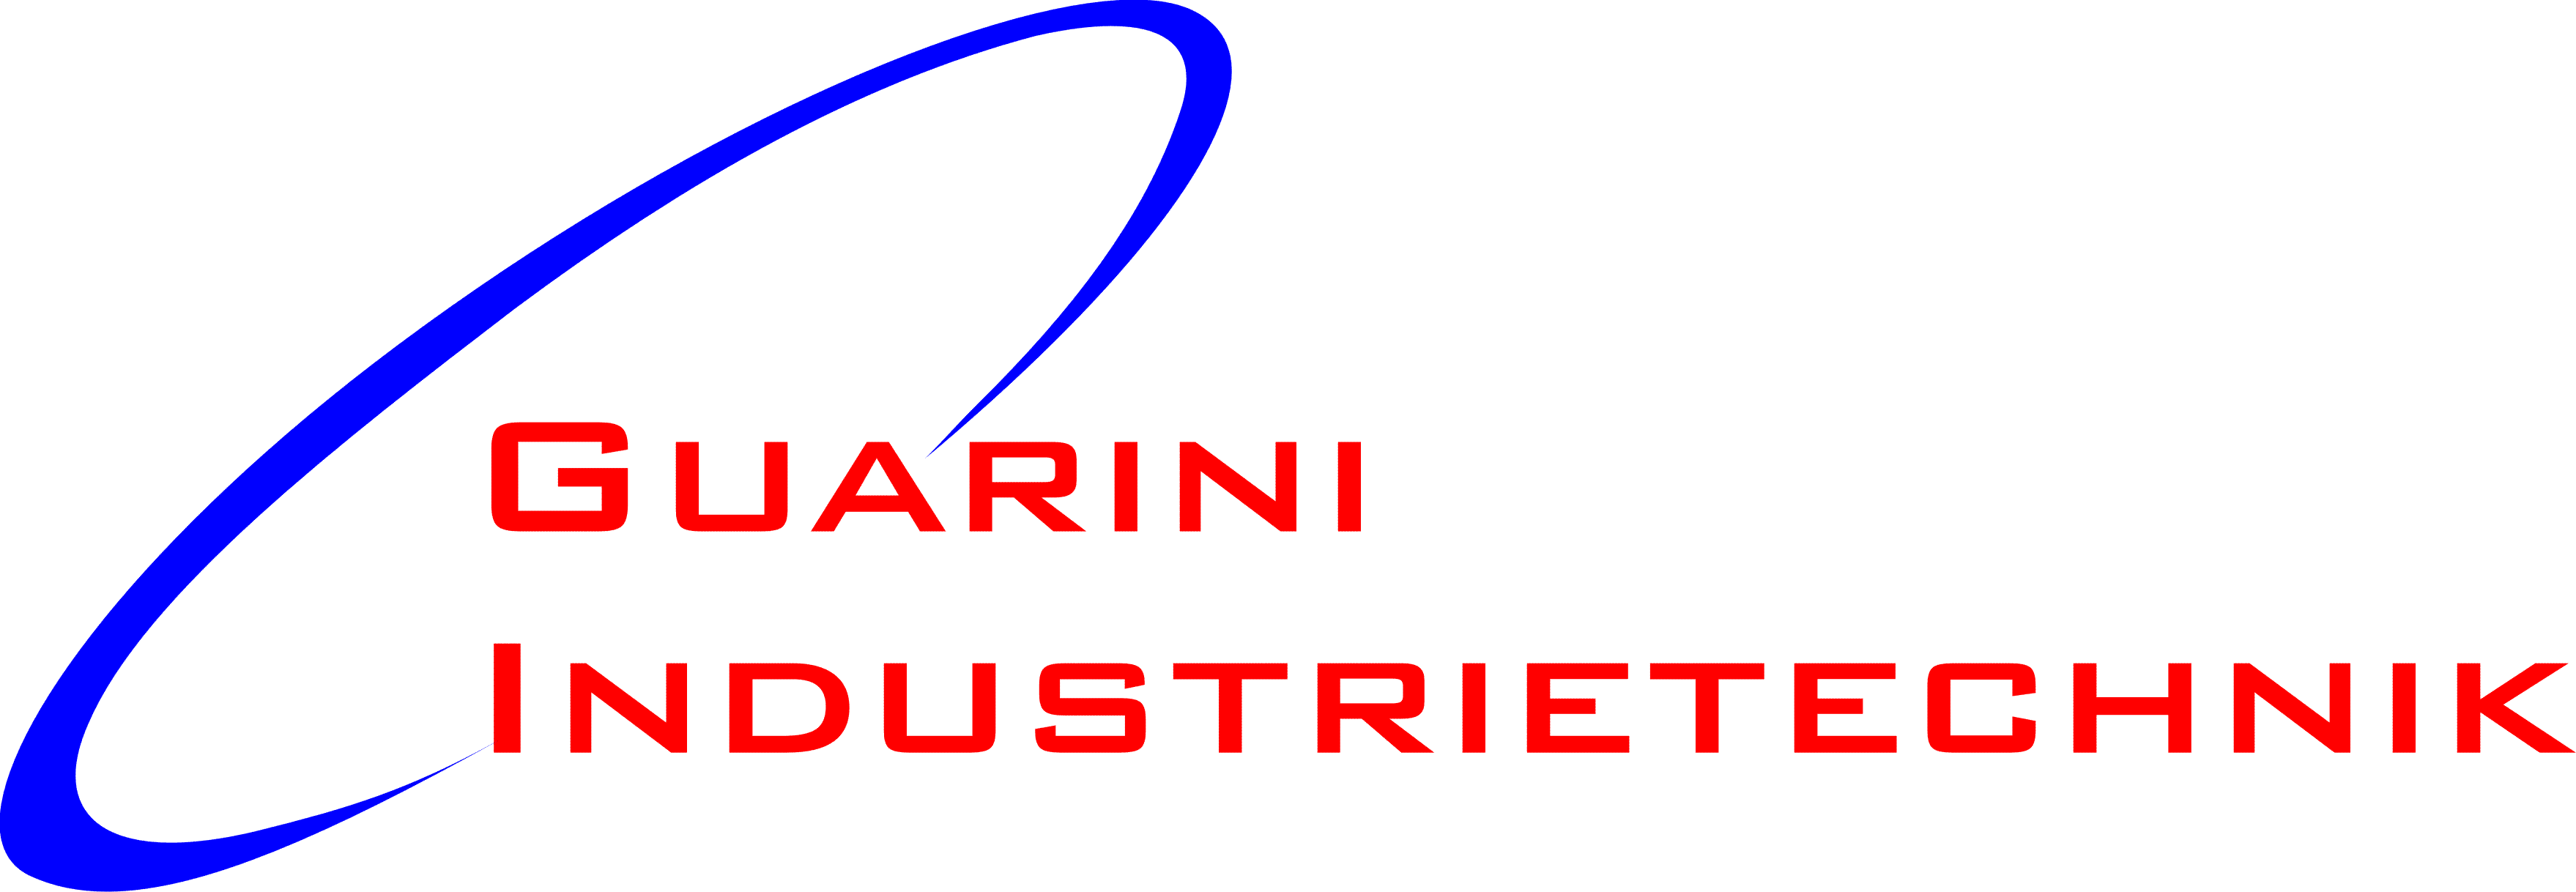 Guarini Industrietechnik Logo